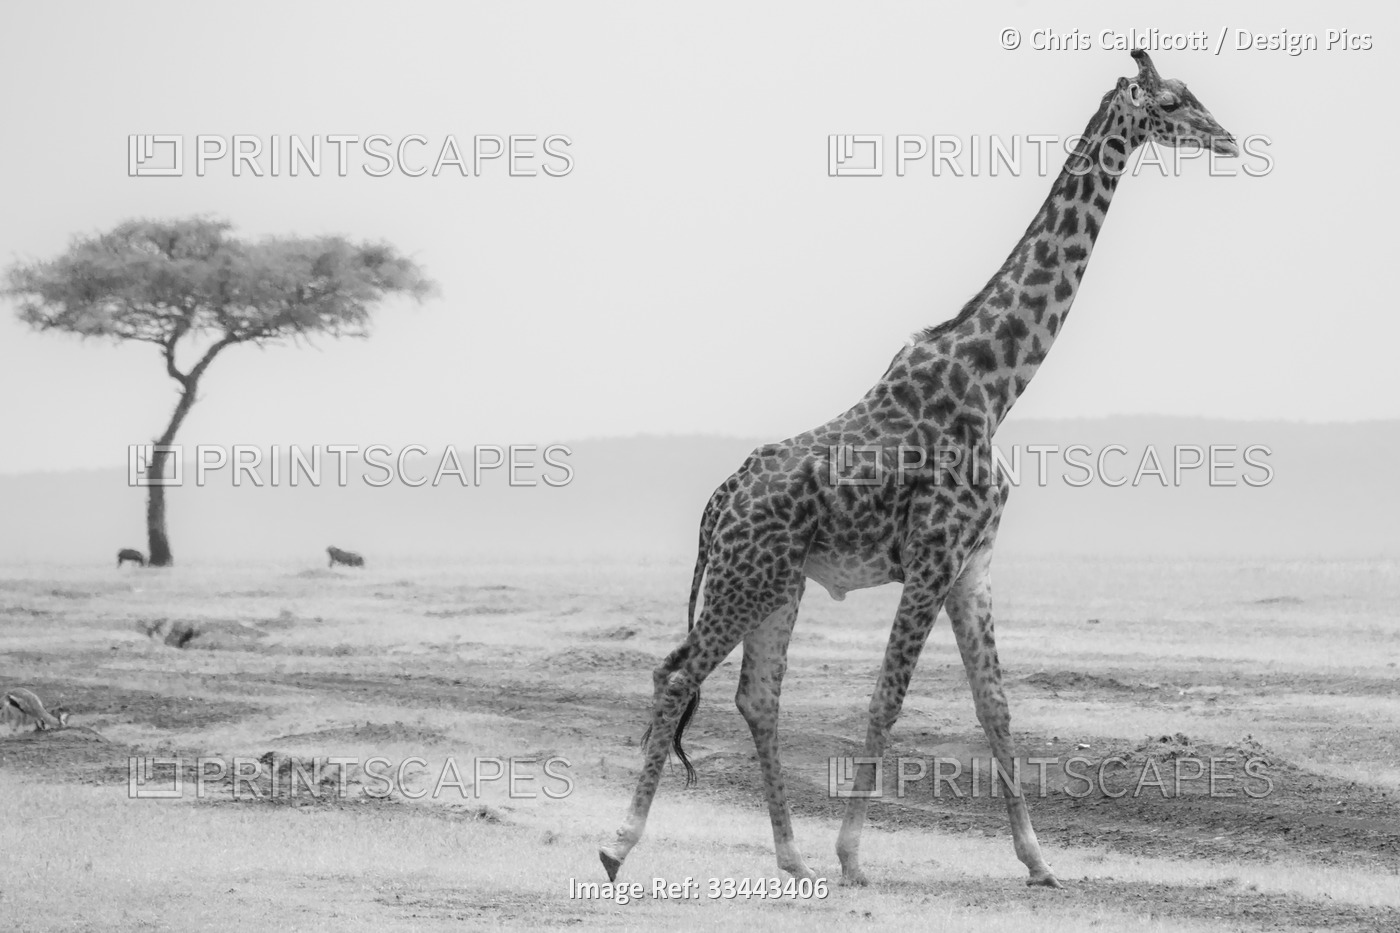 Giraffe spotted on safari in Maasai Mara National Reserve; Kenya